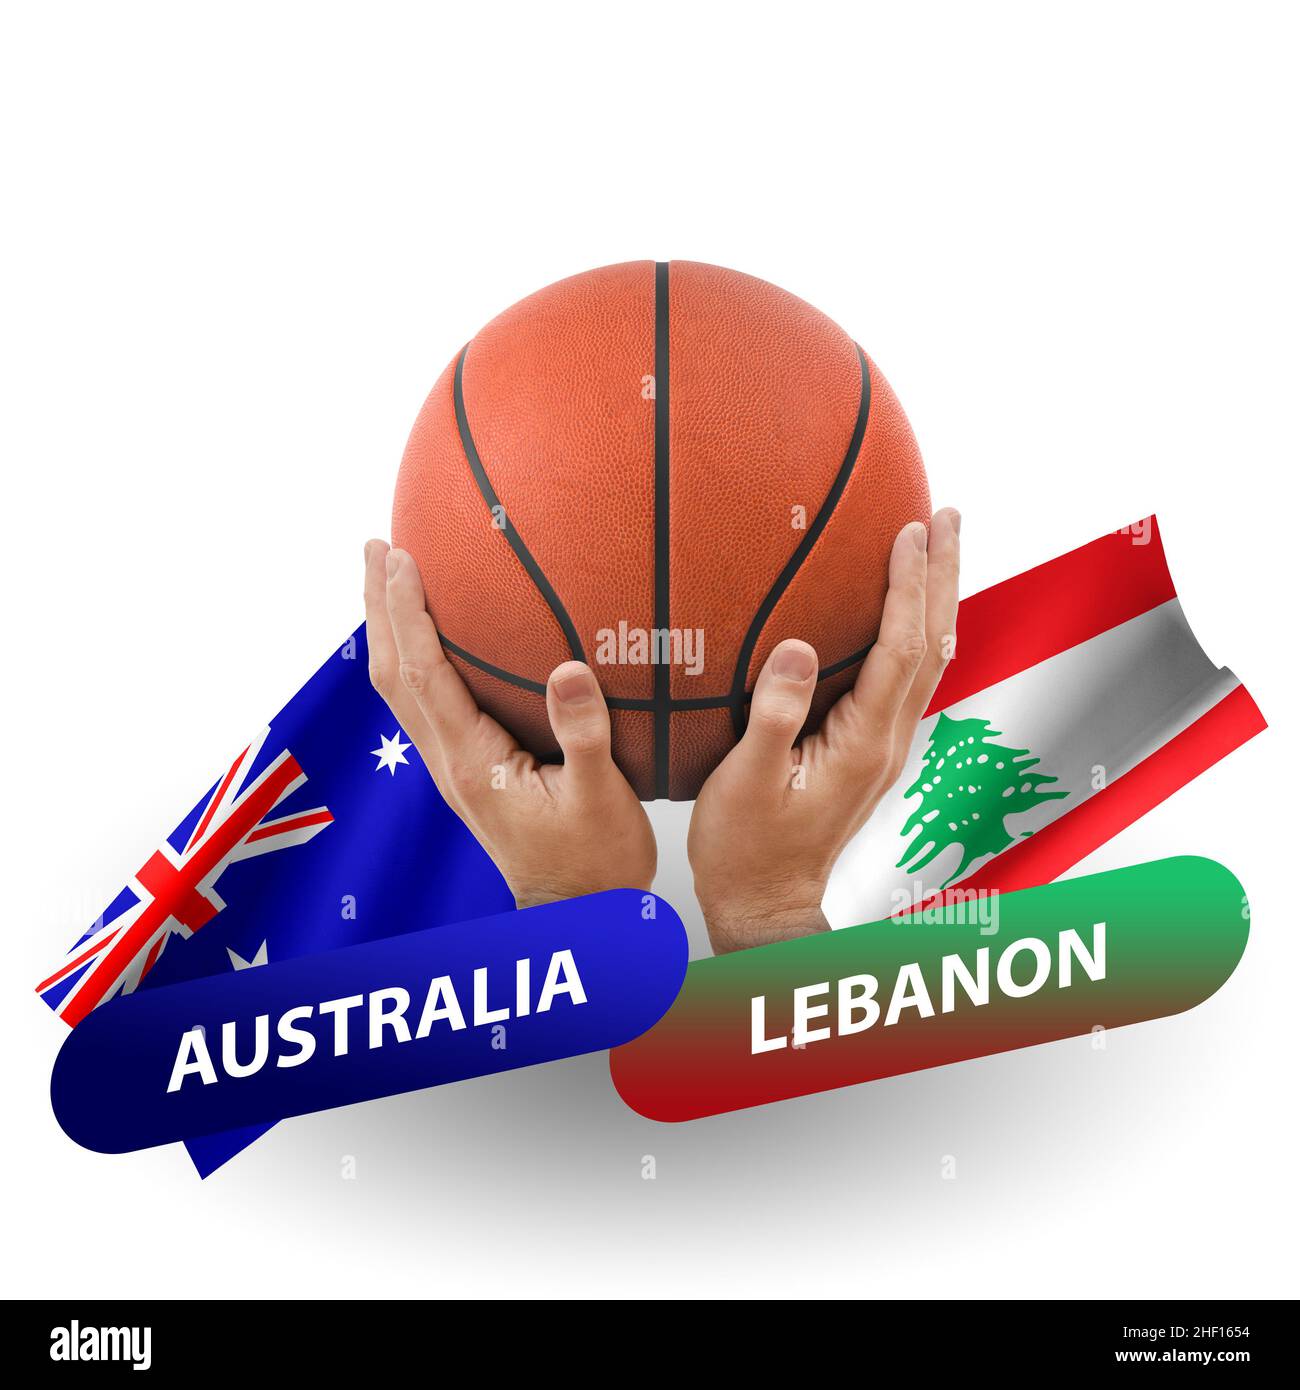 Australia vs lebanon hi-res stock photography and images - Alamy